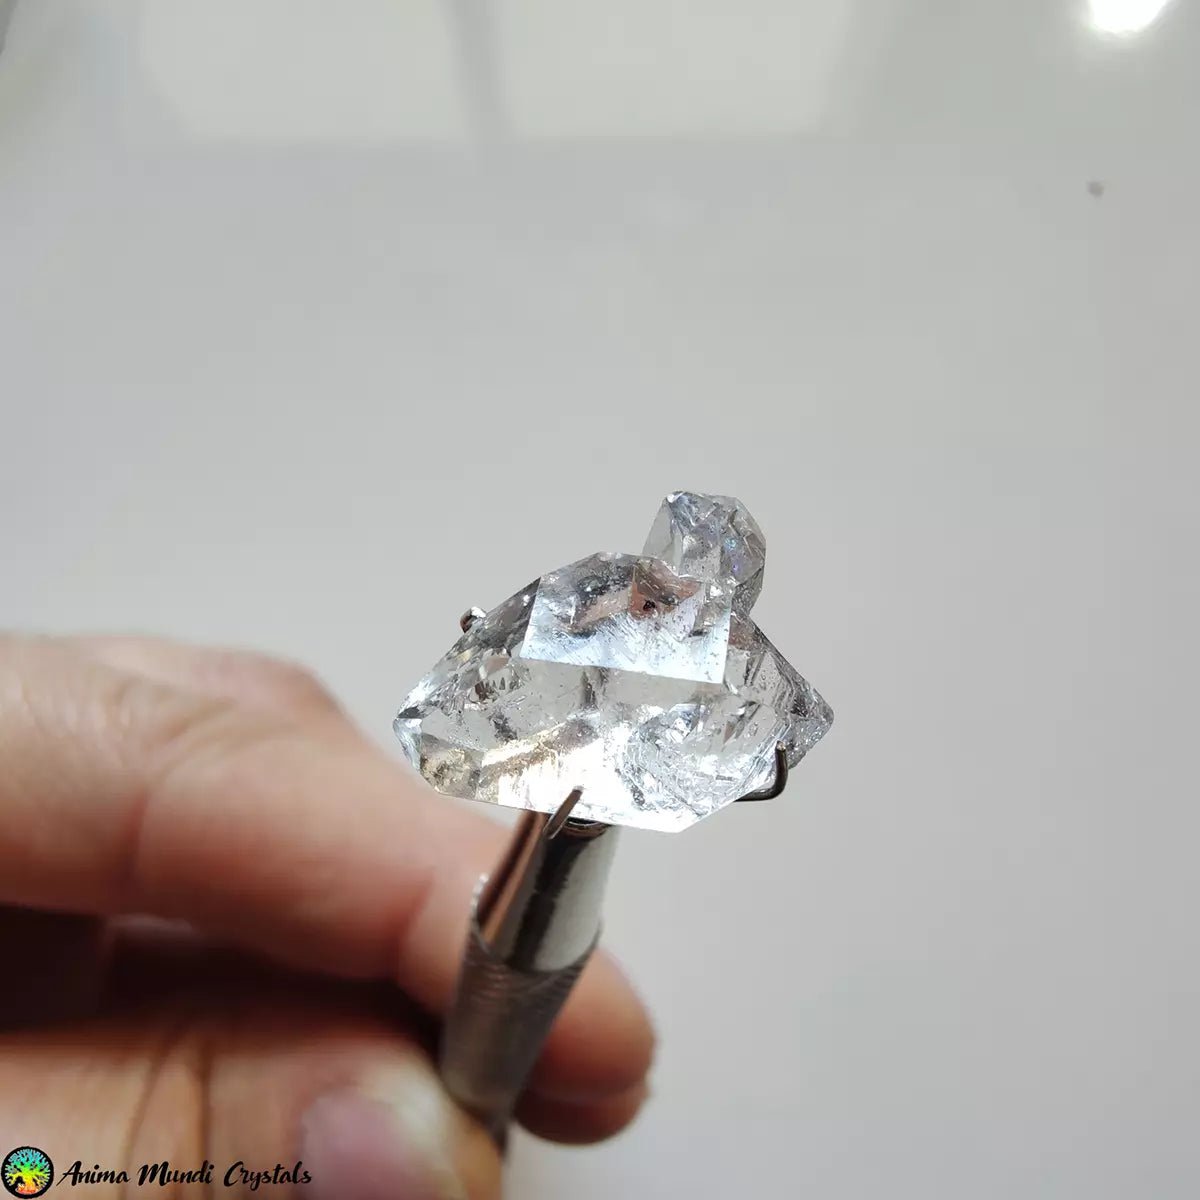 16mm "Herkimer" Diamond Quartz - Anima Mundi Crystals